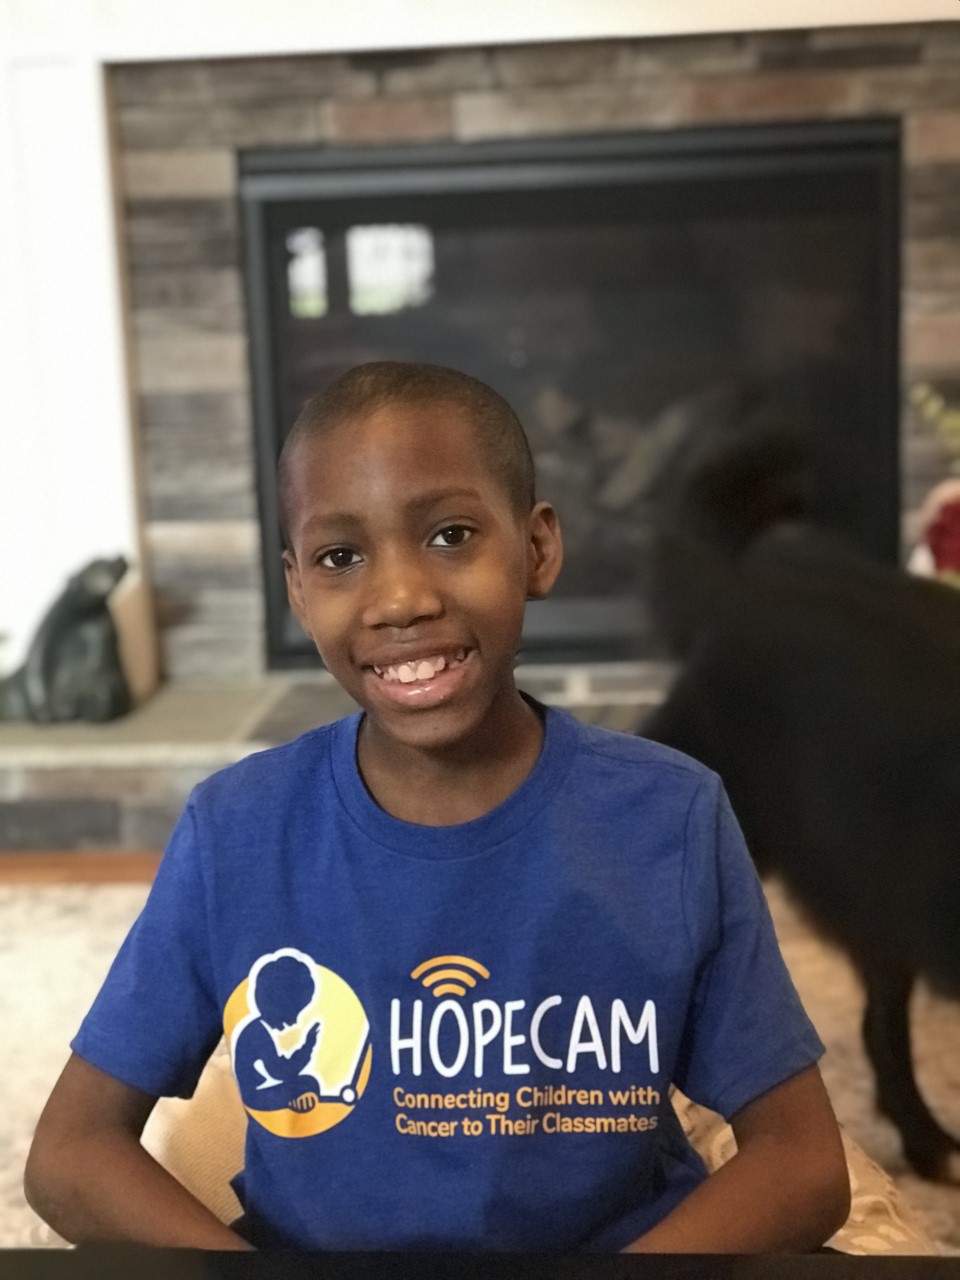 Smiling boy in Hopecam shirt